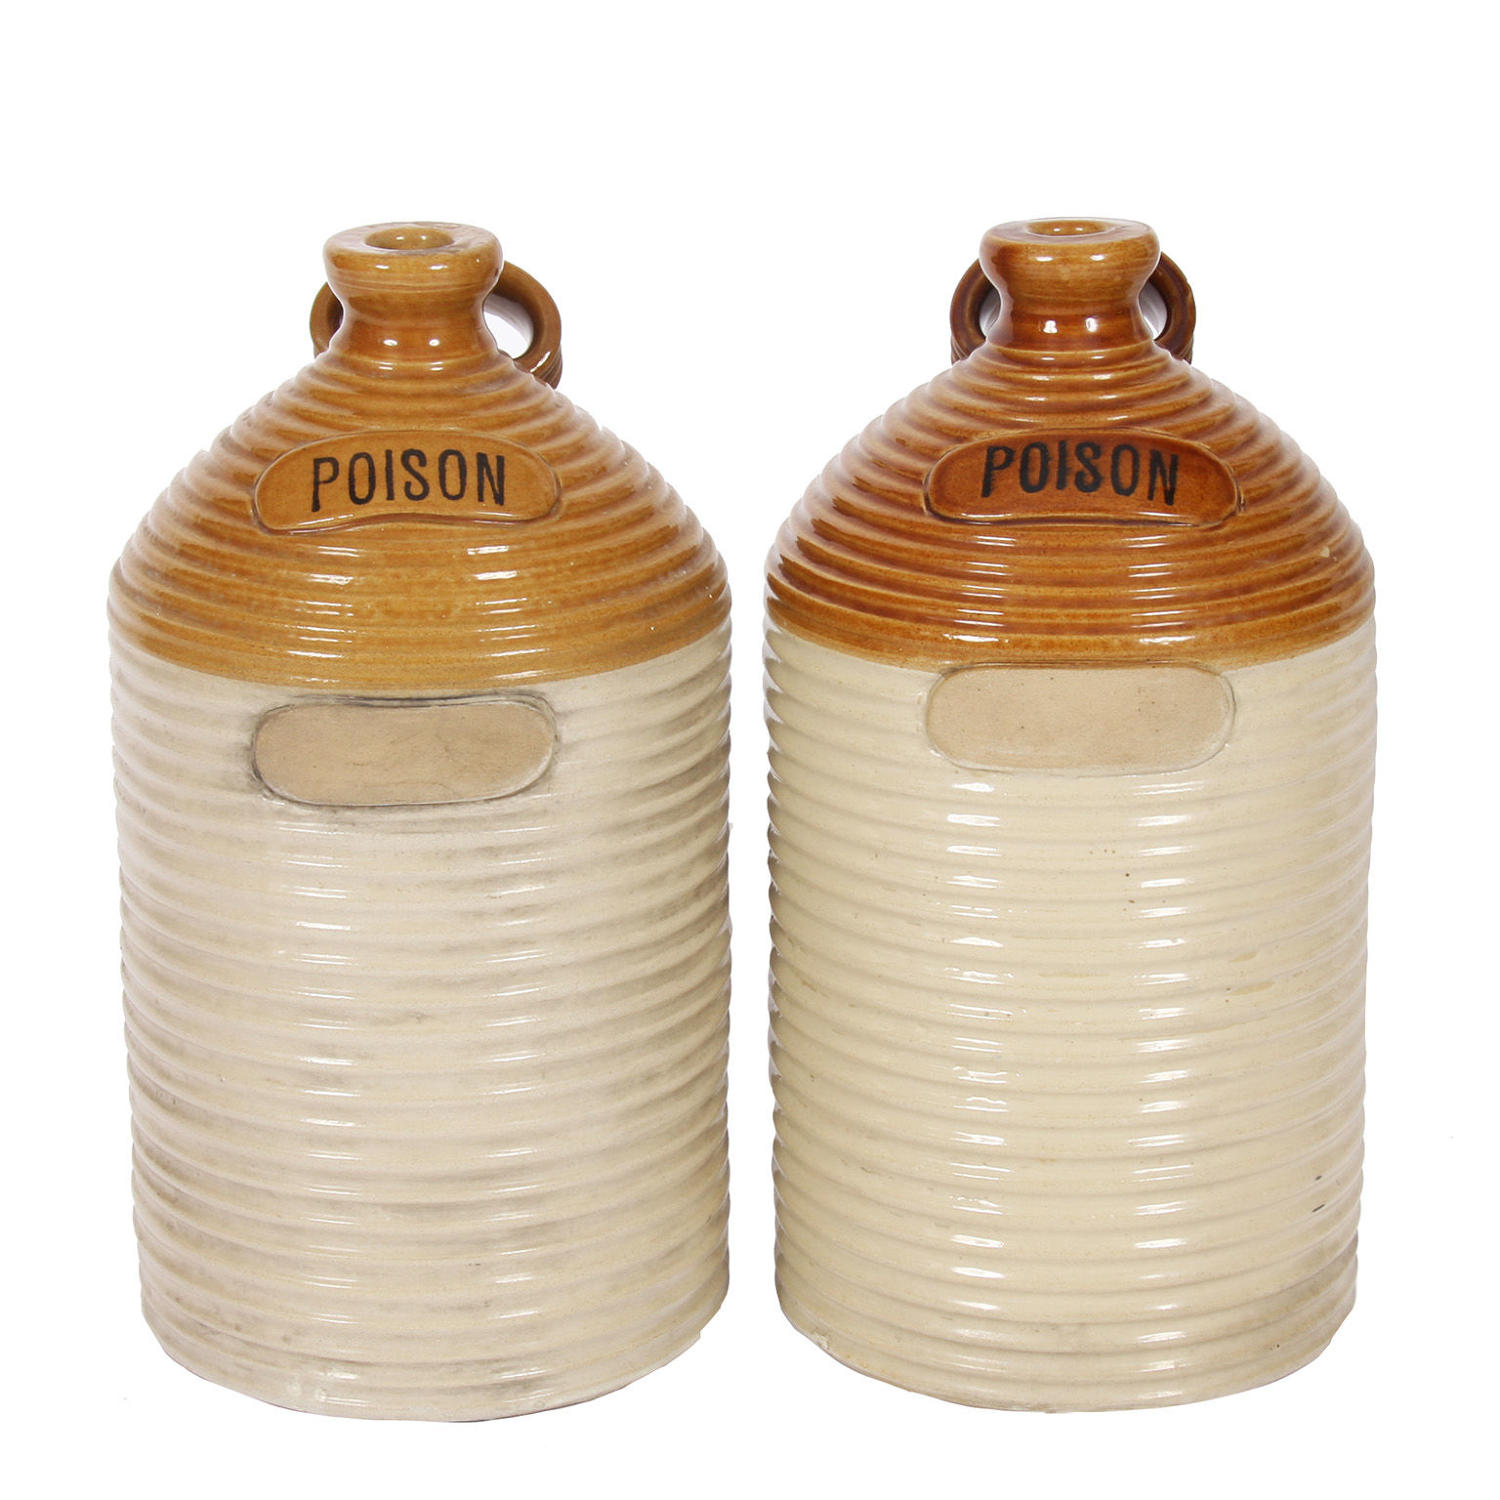 Pair of Stoneware Poison Jars